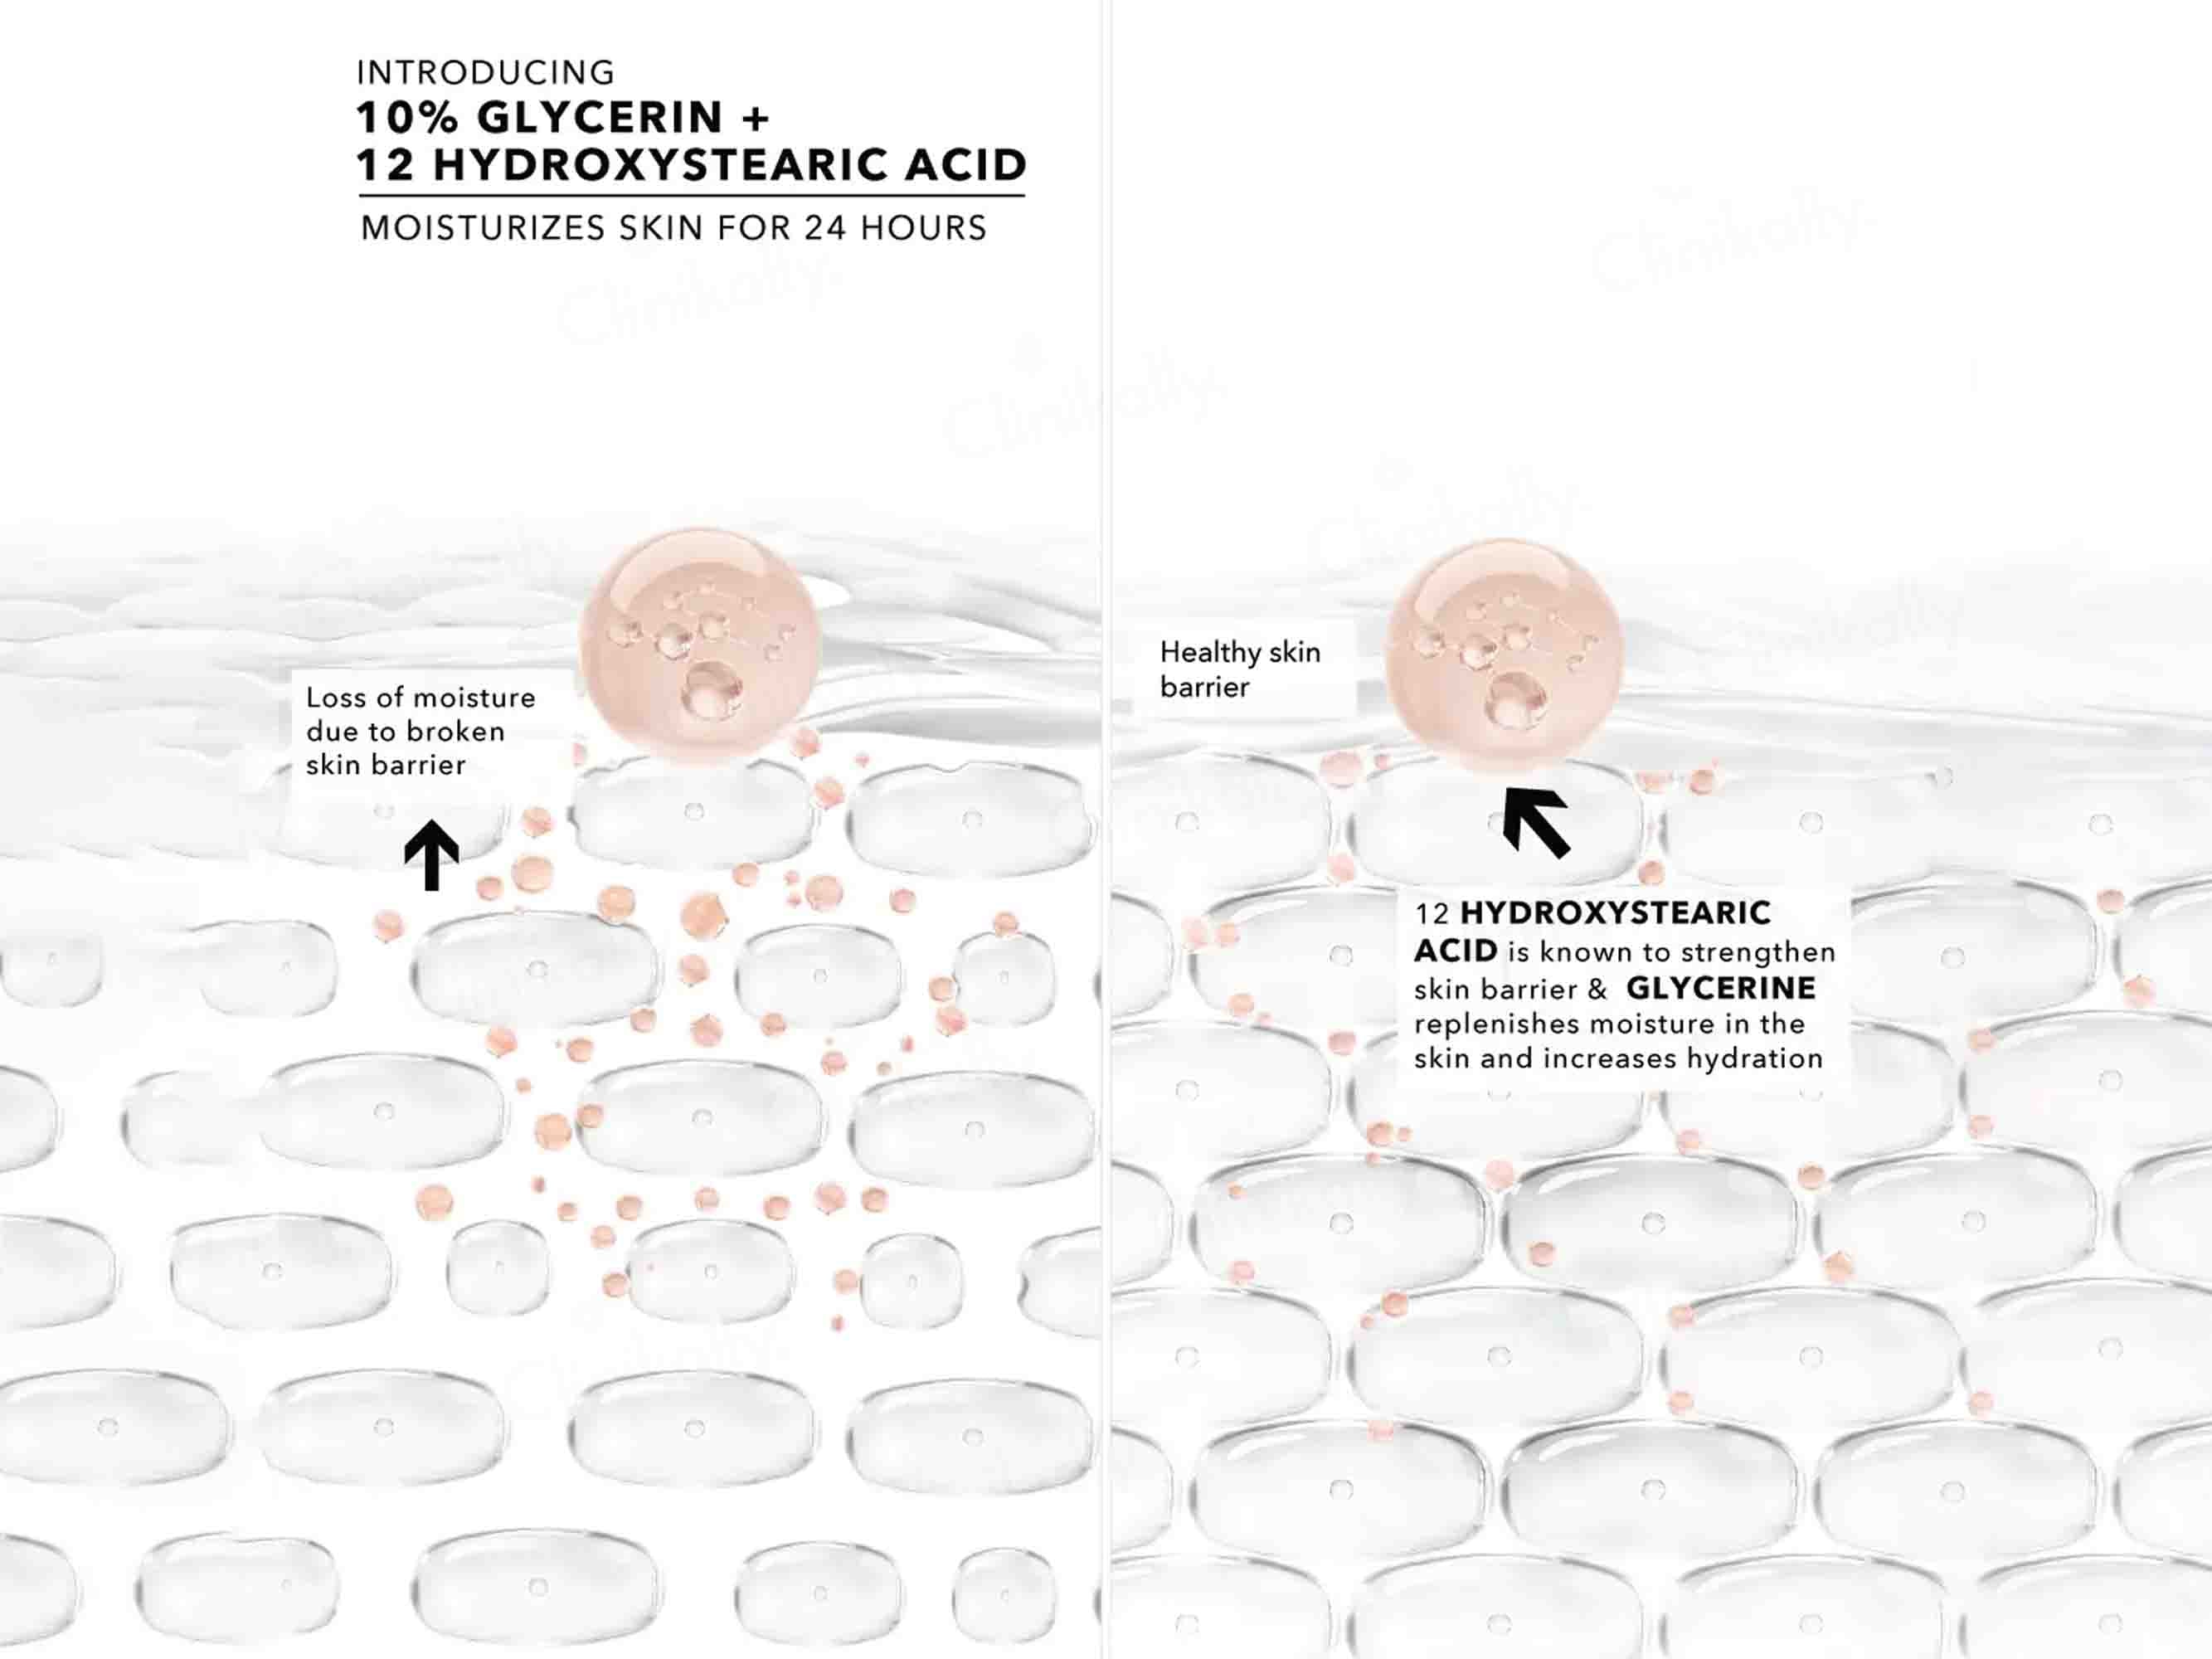 Novology Skin Barrier Protect Cream-Clinikally